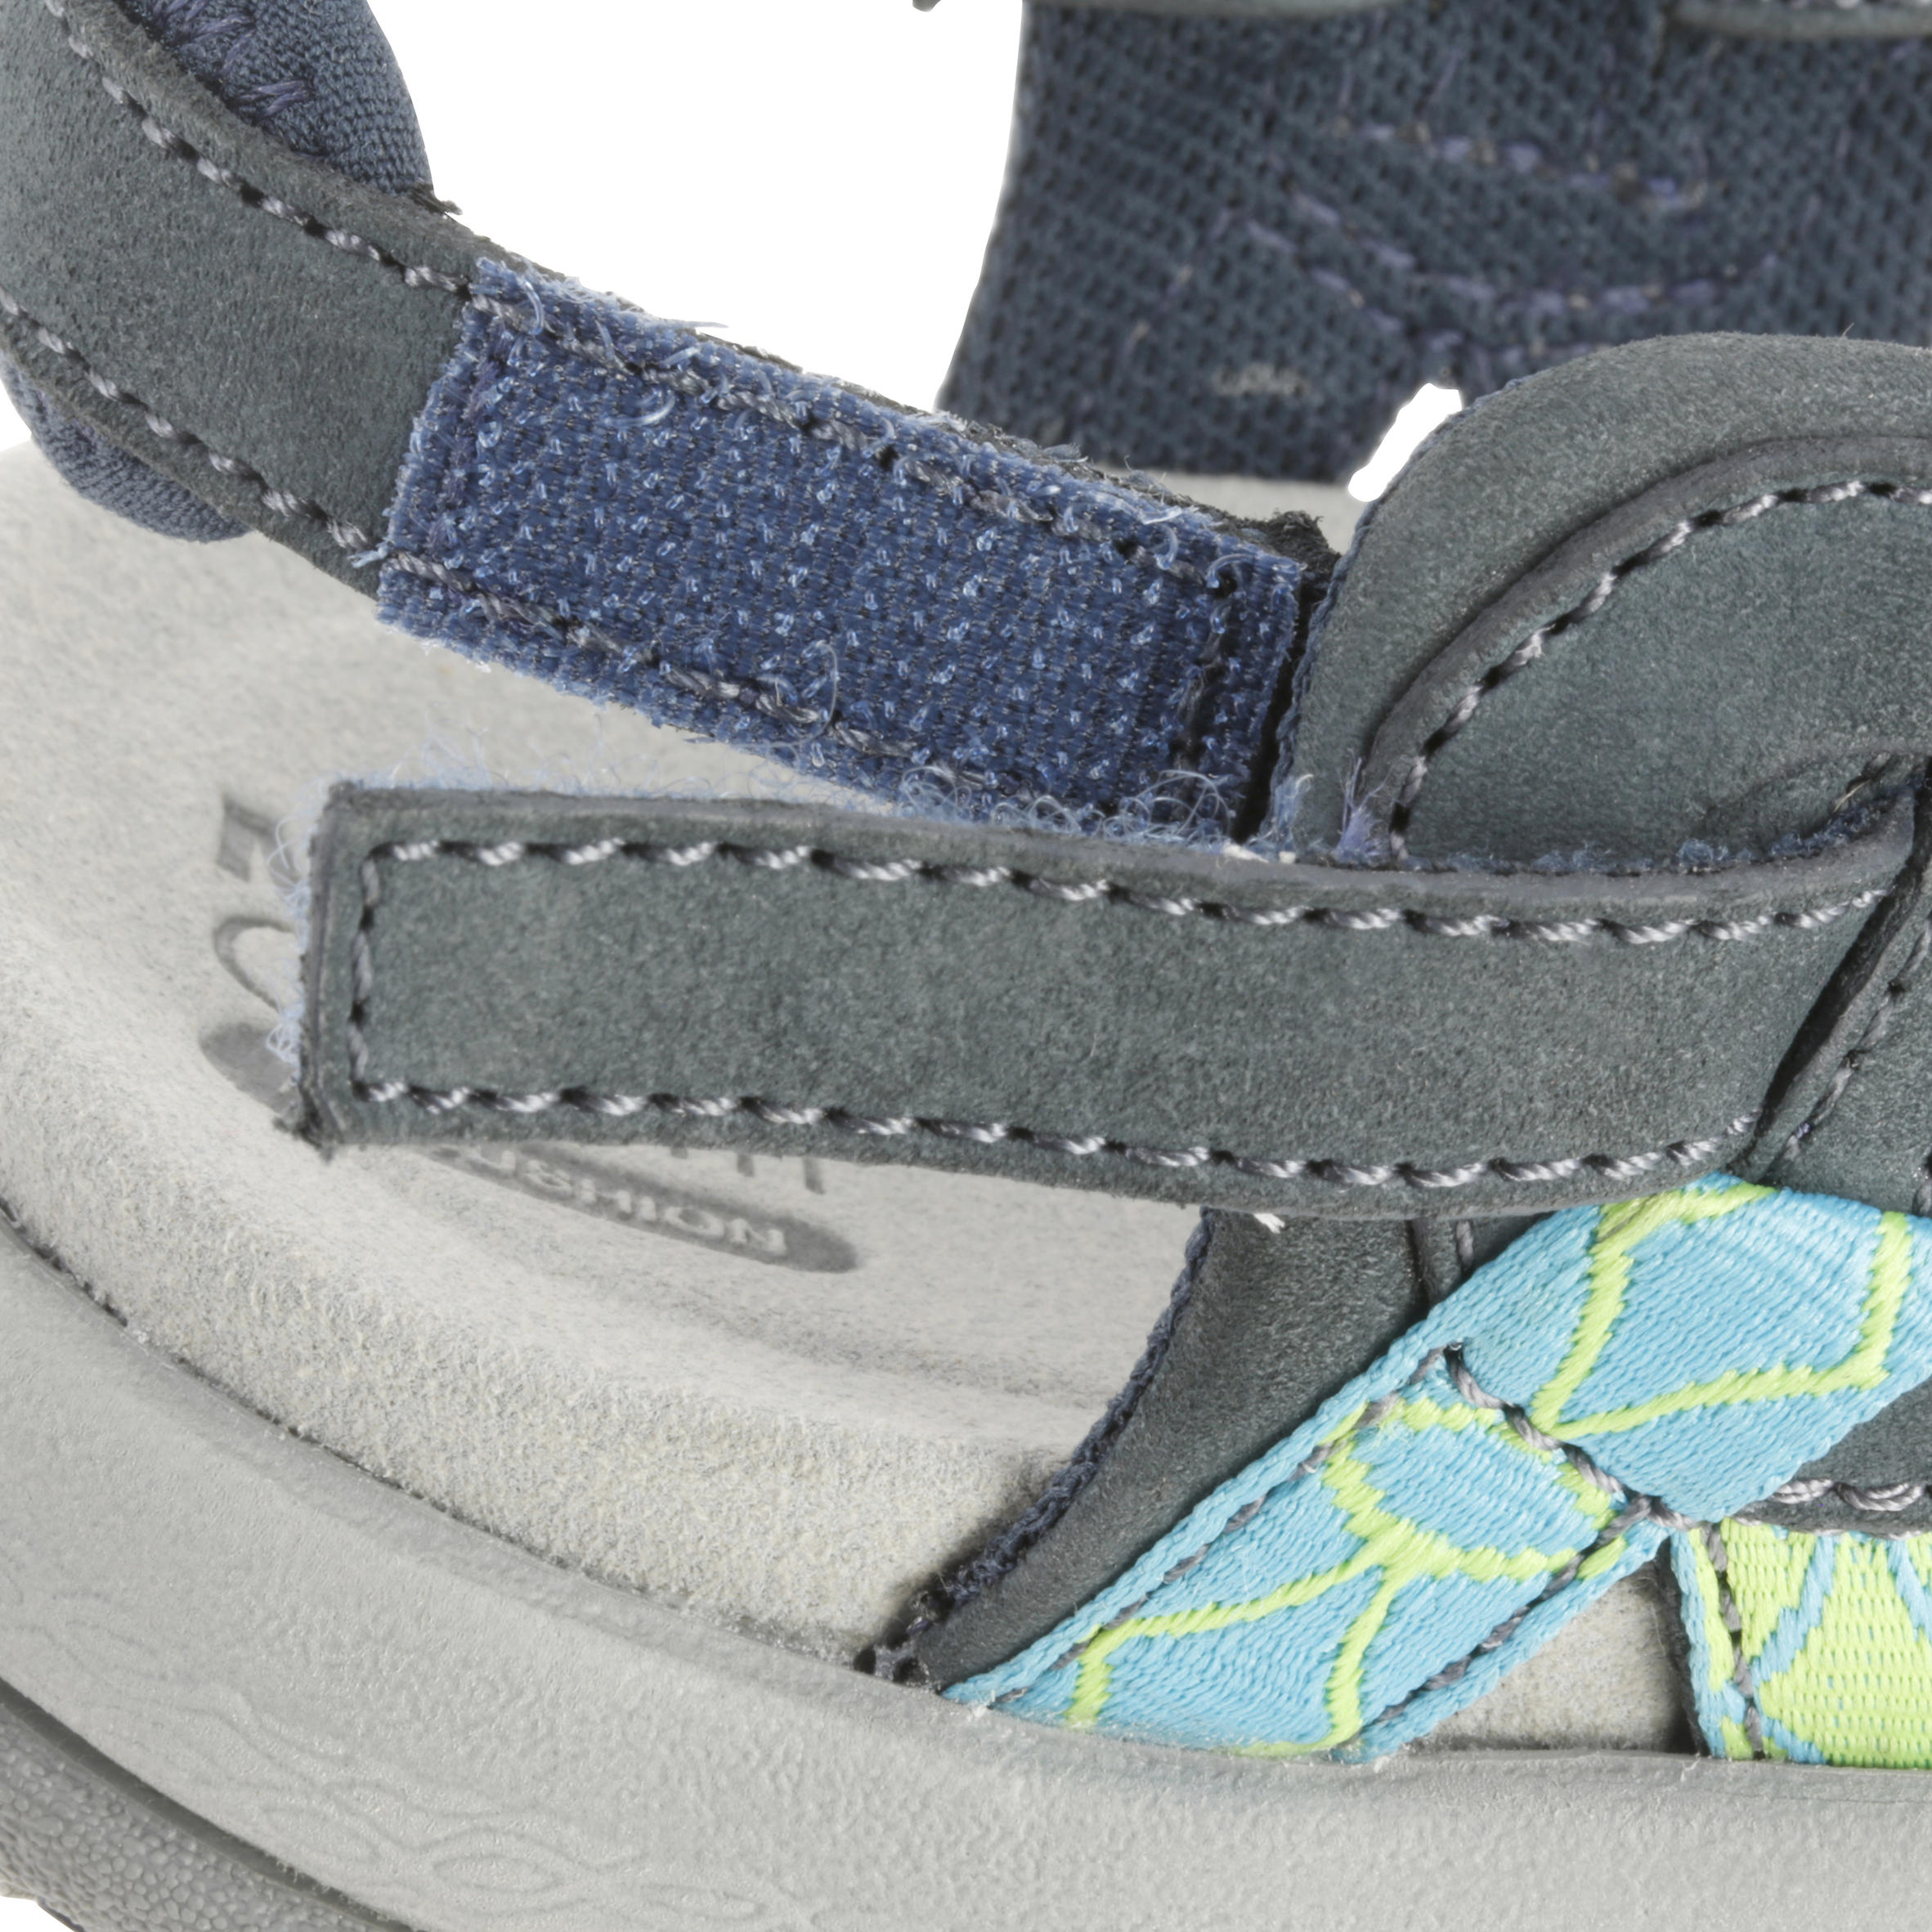 Jacardia Women's Hiking Sandals with Good Grip - Grey 11/14